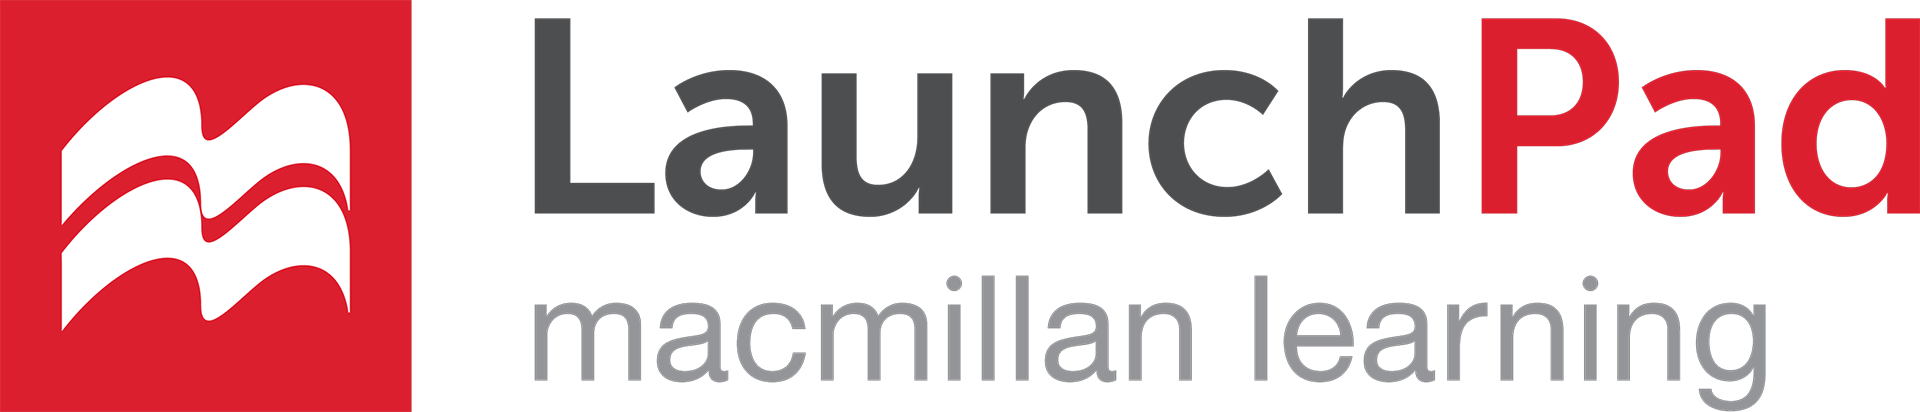 Launchpad macmillan learning logo